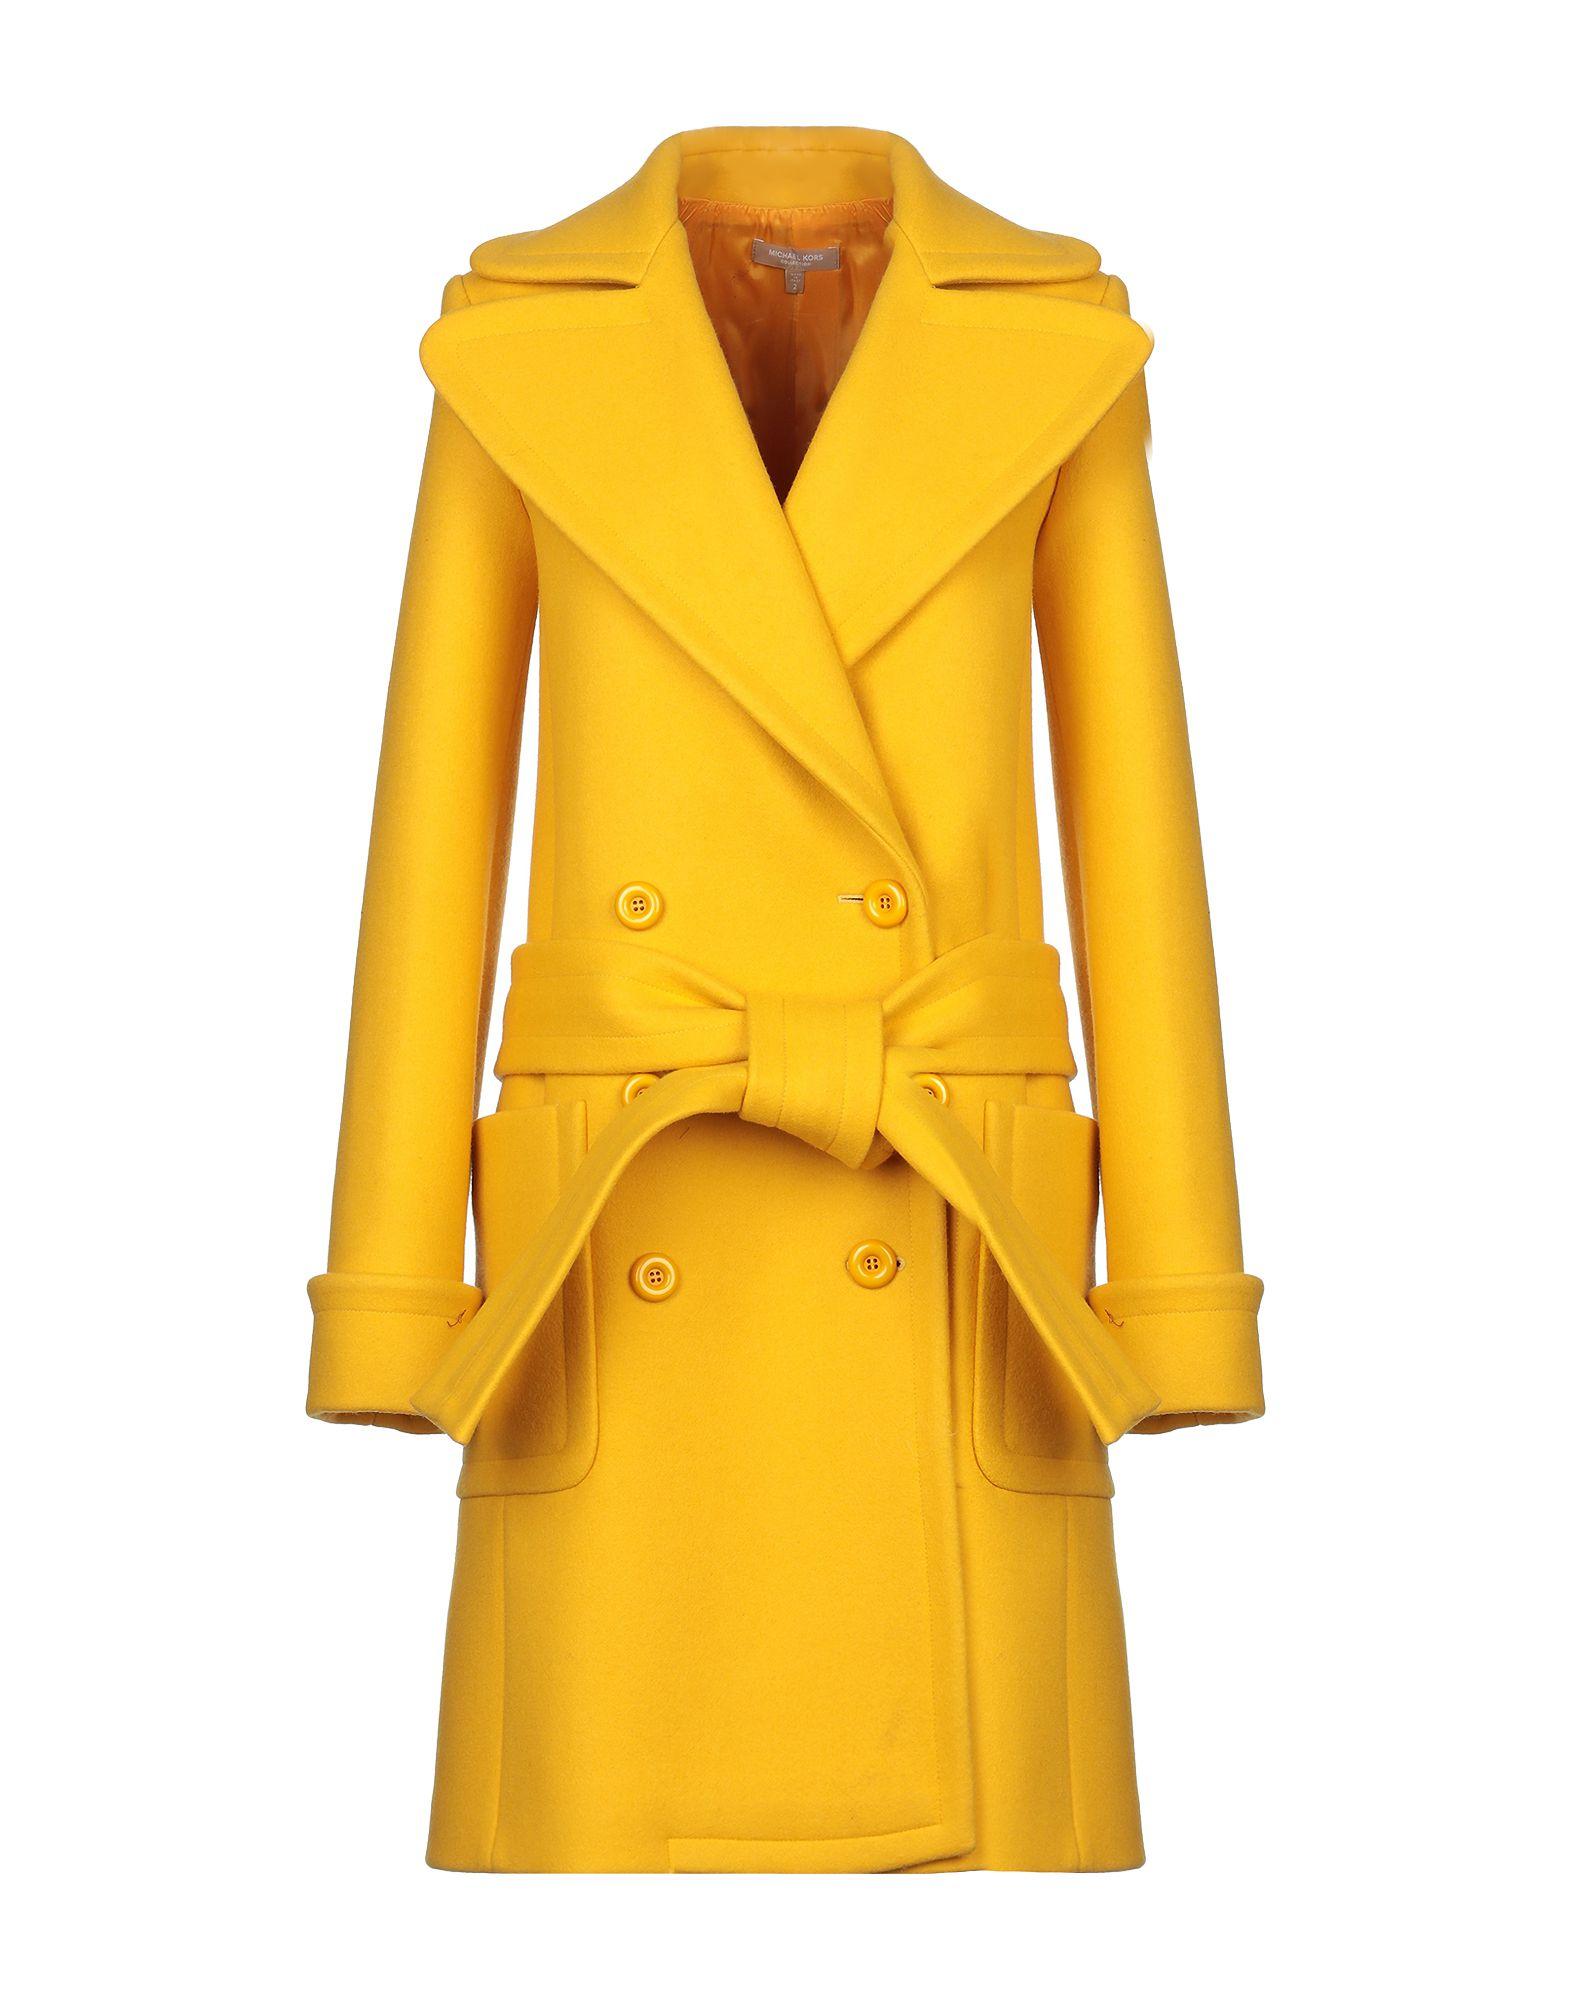 michael kors yellow coat